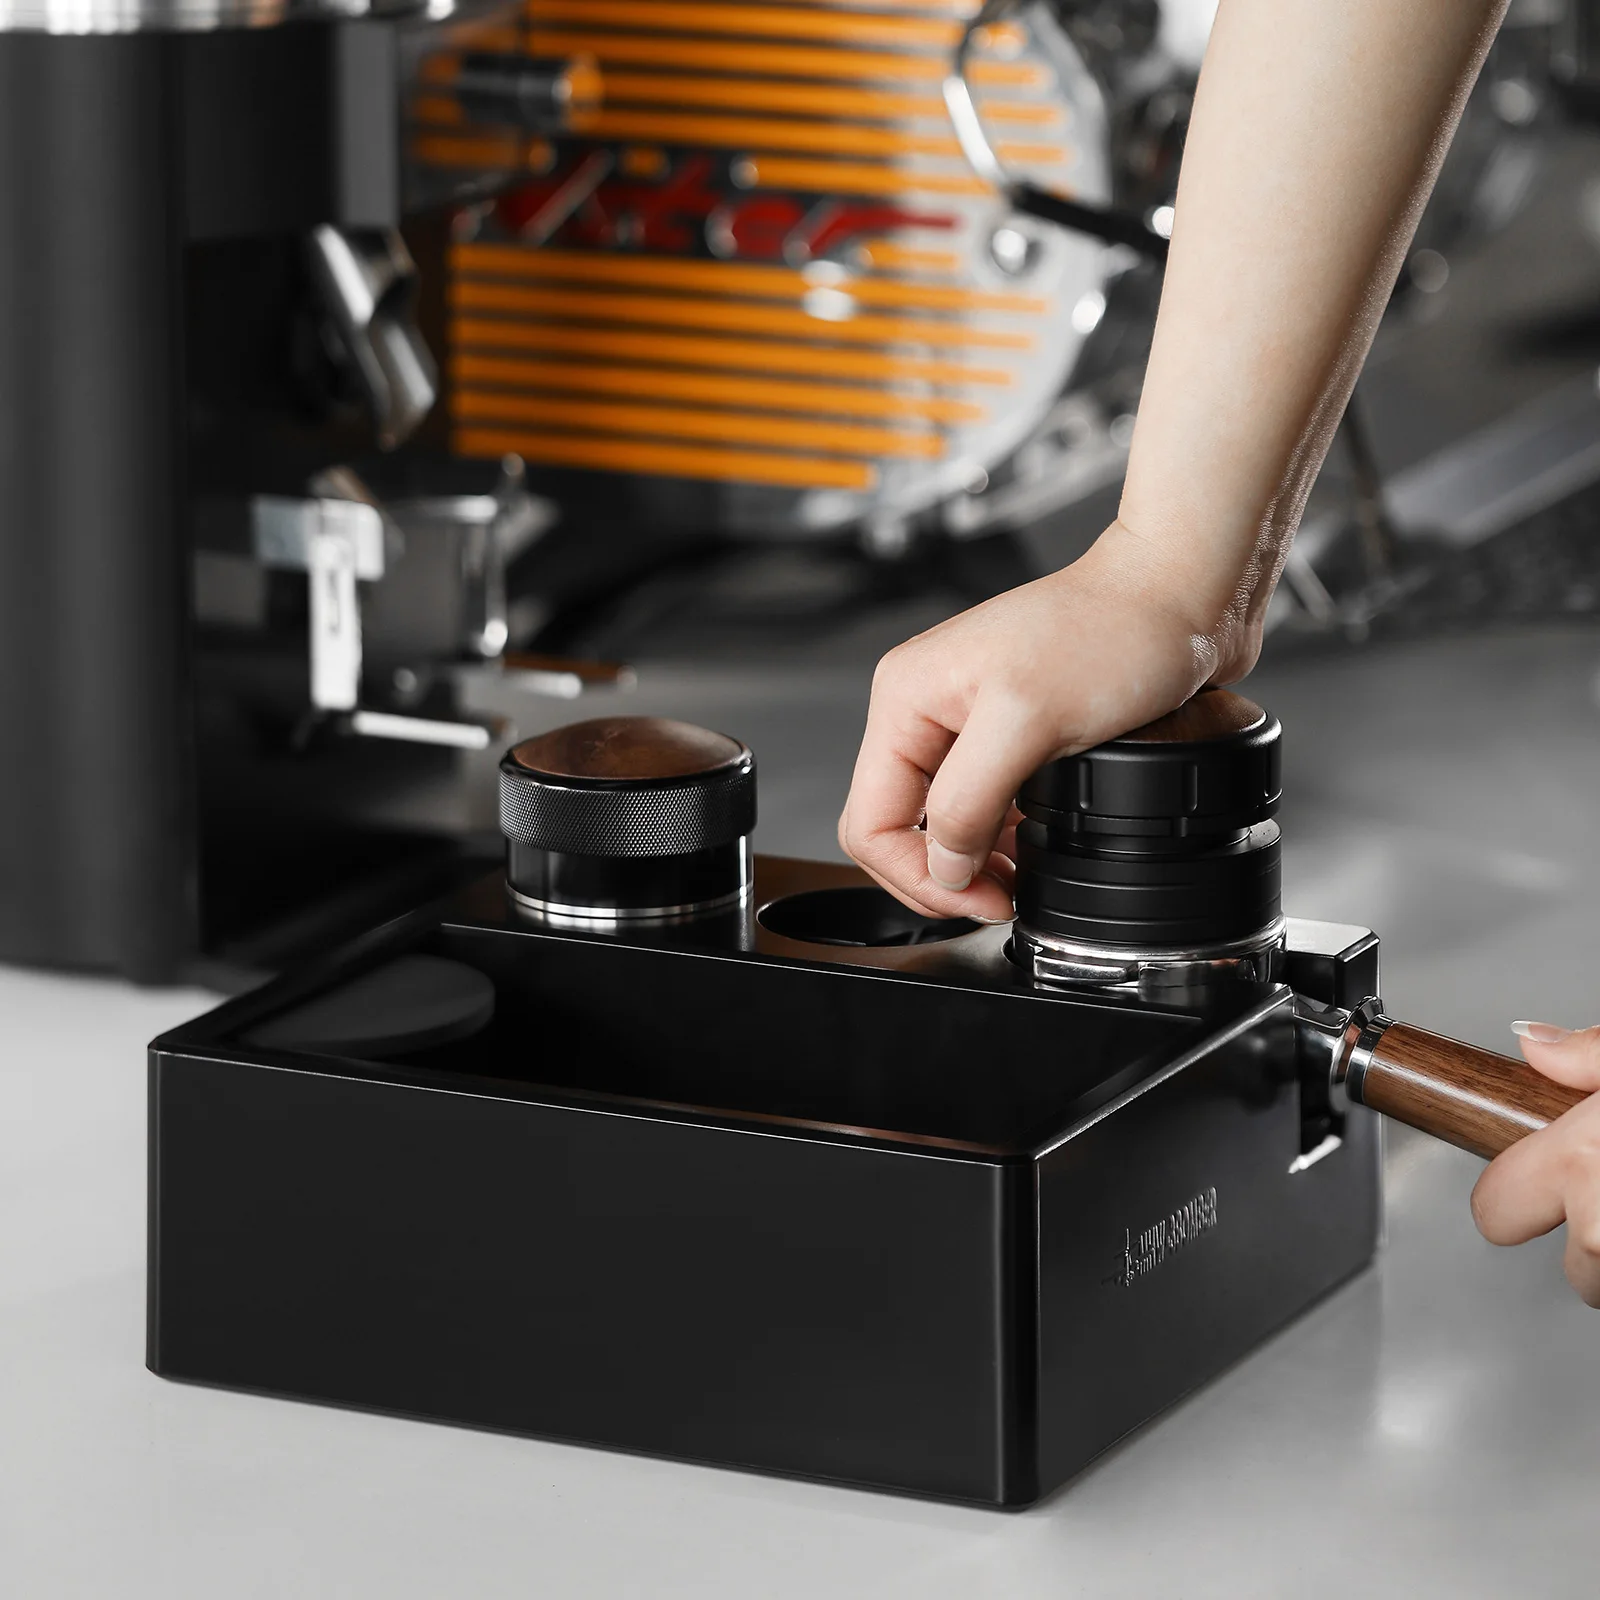 https://ae01.alicdn.com/kf/Sf28d2154361c462197dd342113521fb4I/Multifunctional-Knock-Box-Plastic-Adjustable-Tamping-Station-Fit-51-58mm-Espresso-Portafilter-Home-Barista-Coffee-Accessories.jpg